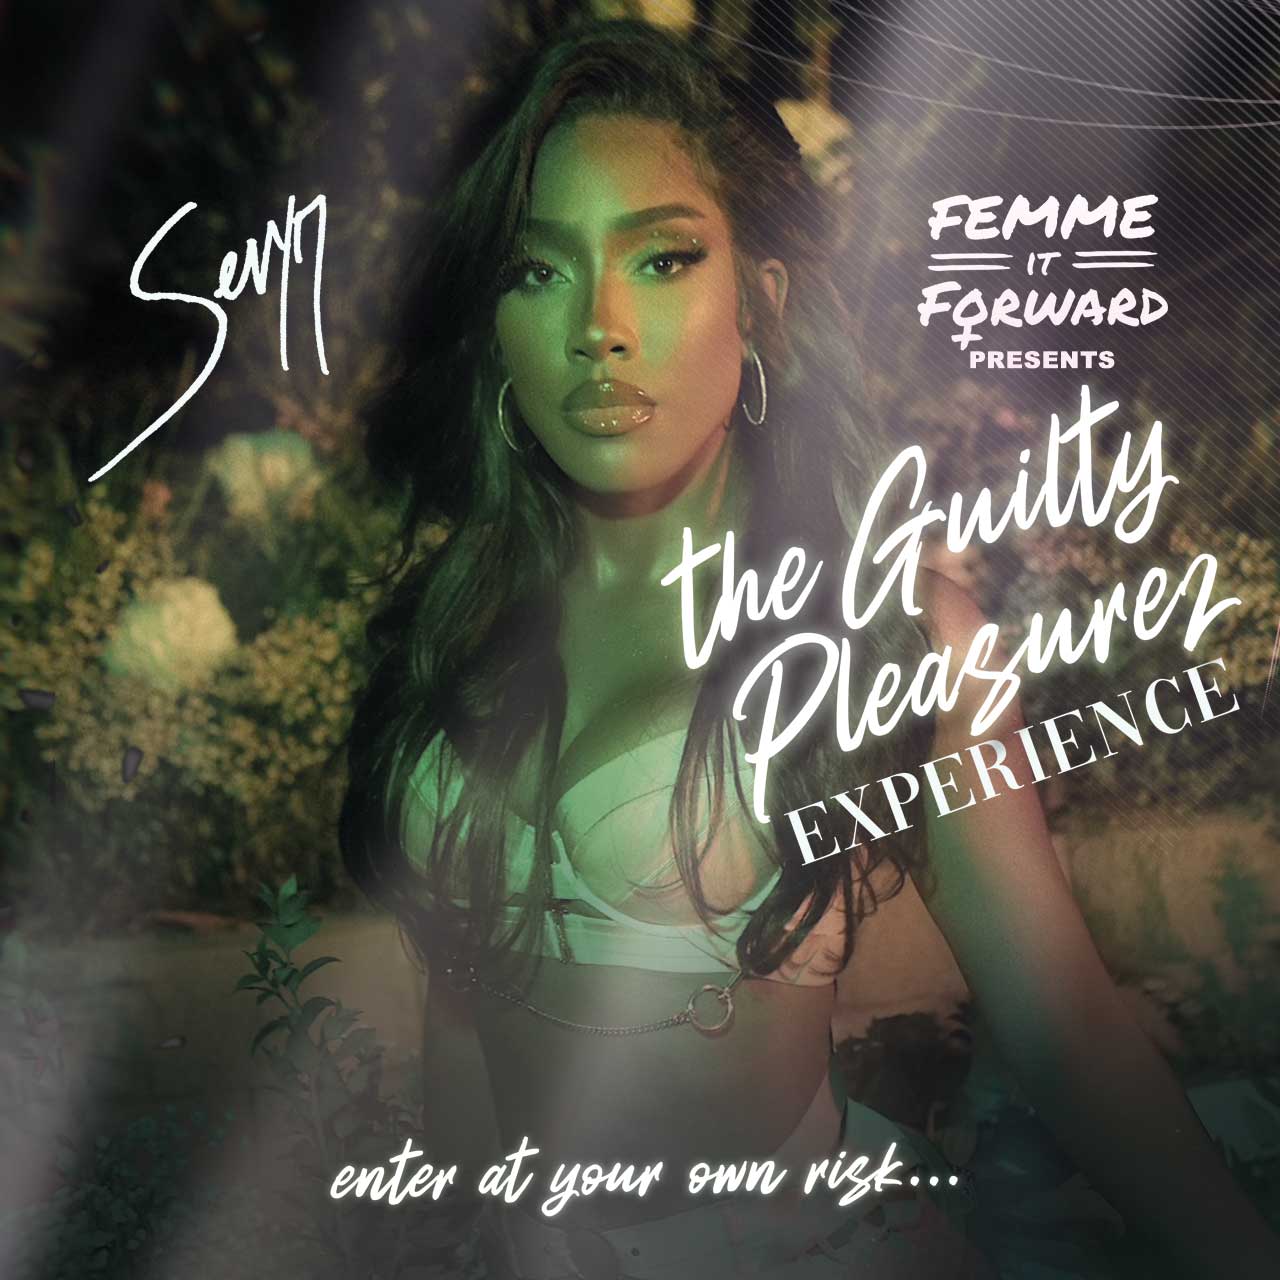 Femme It Forward Presents: The Guilty Pleasurez Experience